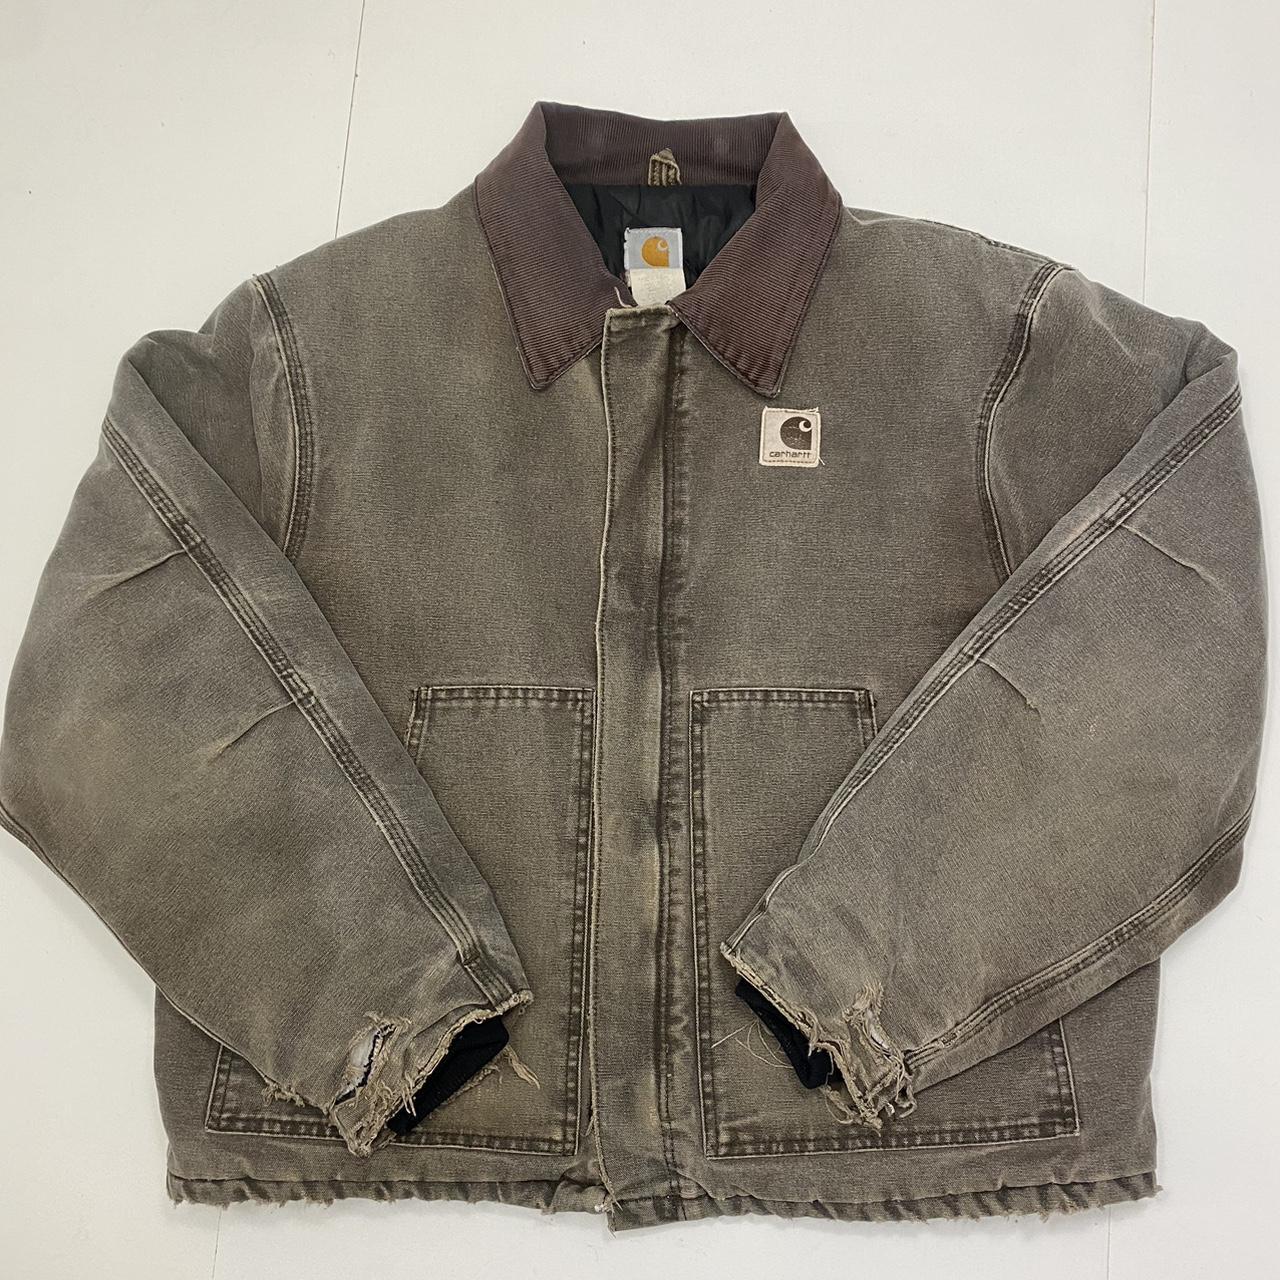 Vintage Carhartt Jacket -This jacket has a nice... - Depop